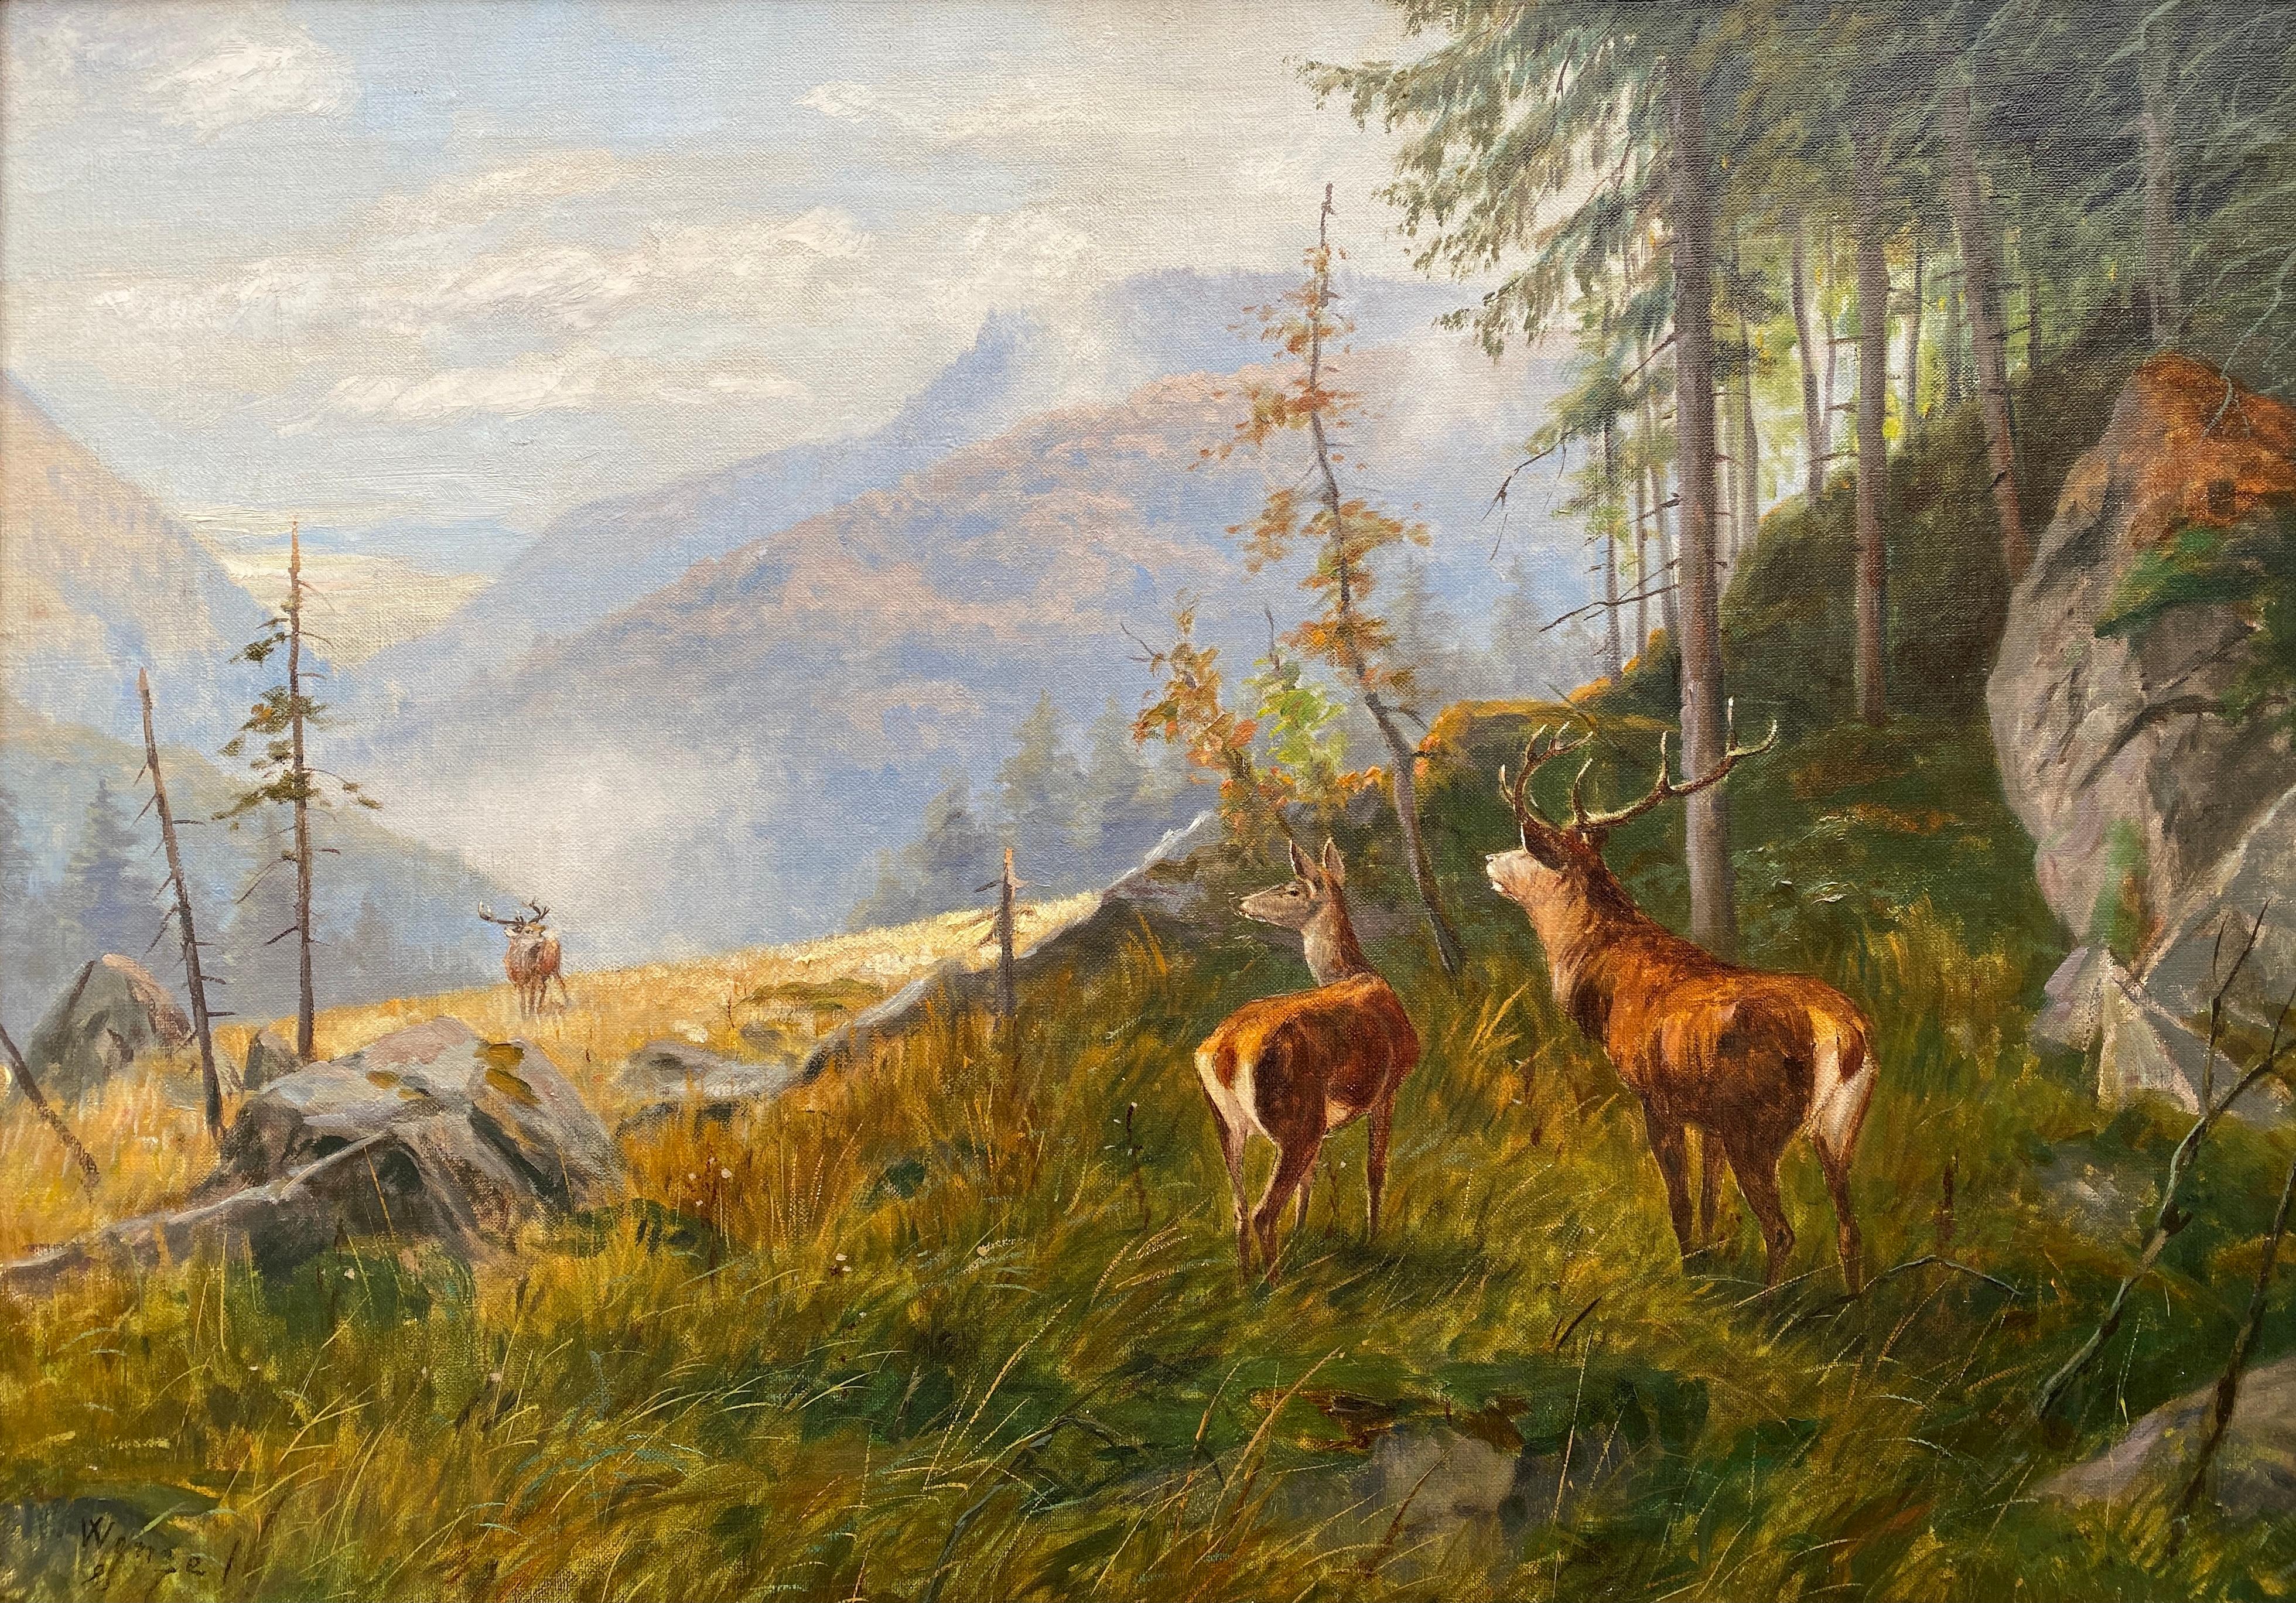 Deer in a Mountain Landscape, Karl-Heinz Wenzel, 20th Century, German Painter - Painting by Wenzel Karl-Heinz